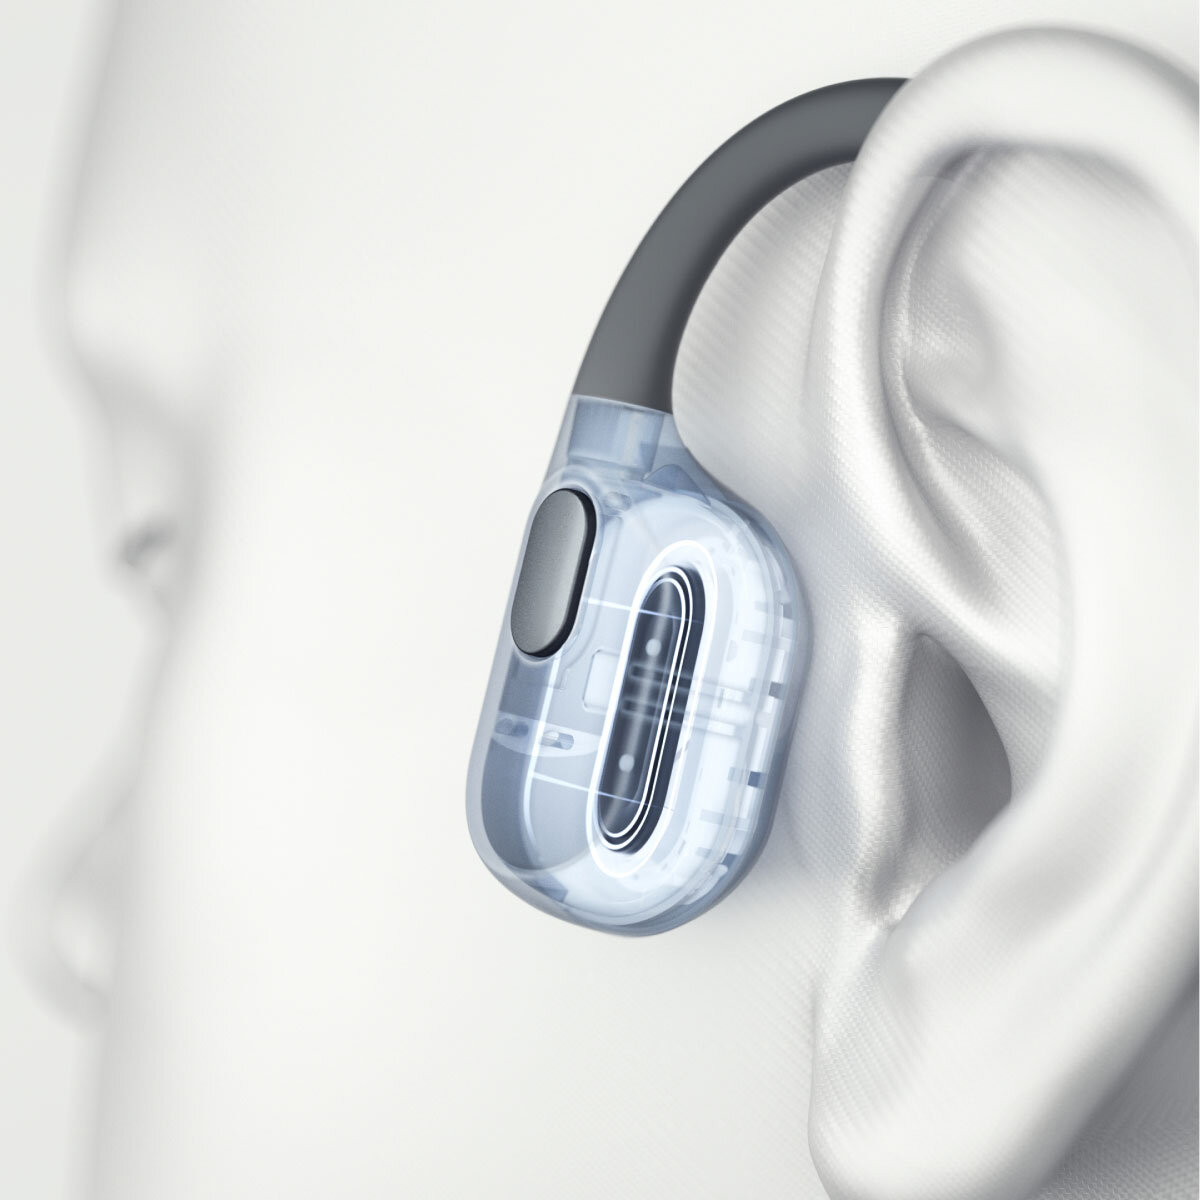 Buy Shokz OpenRun Mini Bone Conduction Headphones at Costco.co.uk